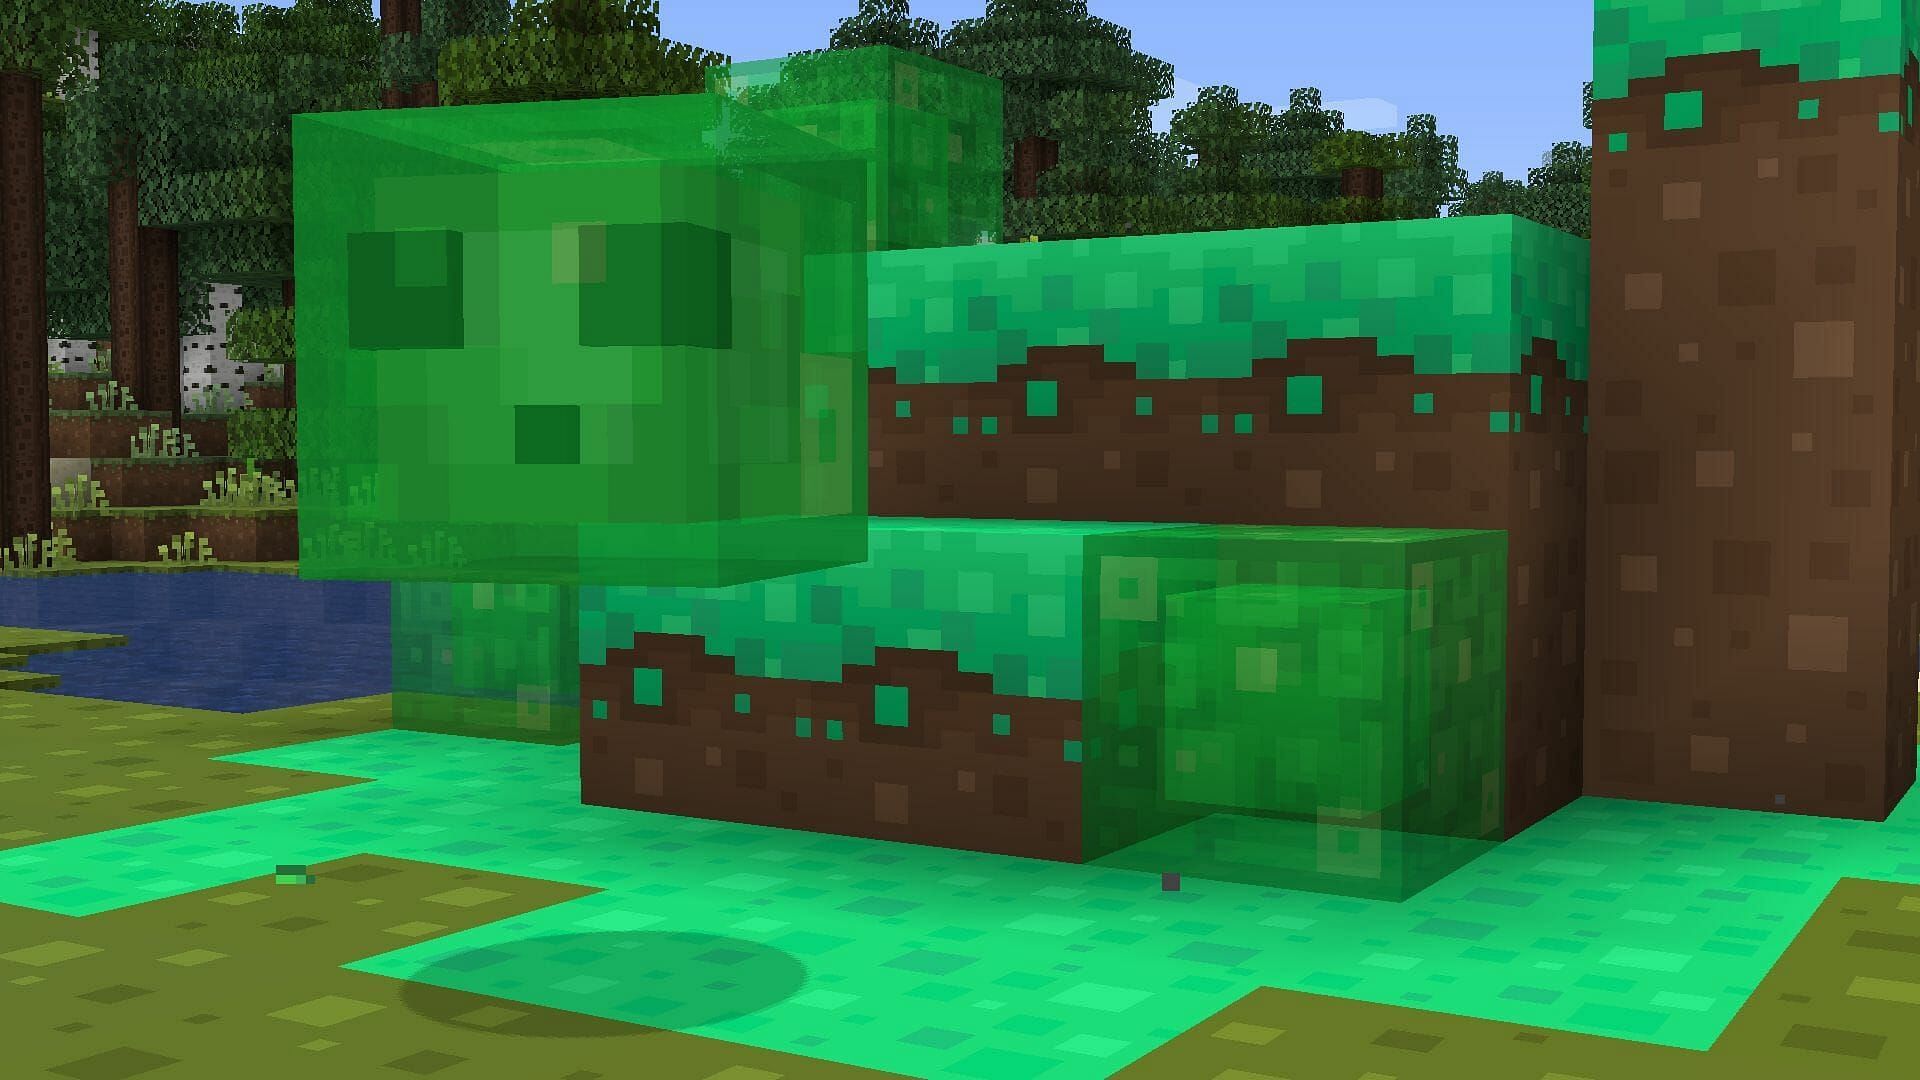 Slime blocks in Minecraft (Image via Minecraft)